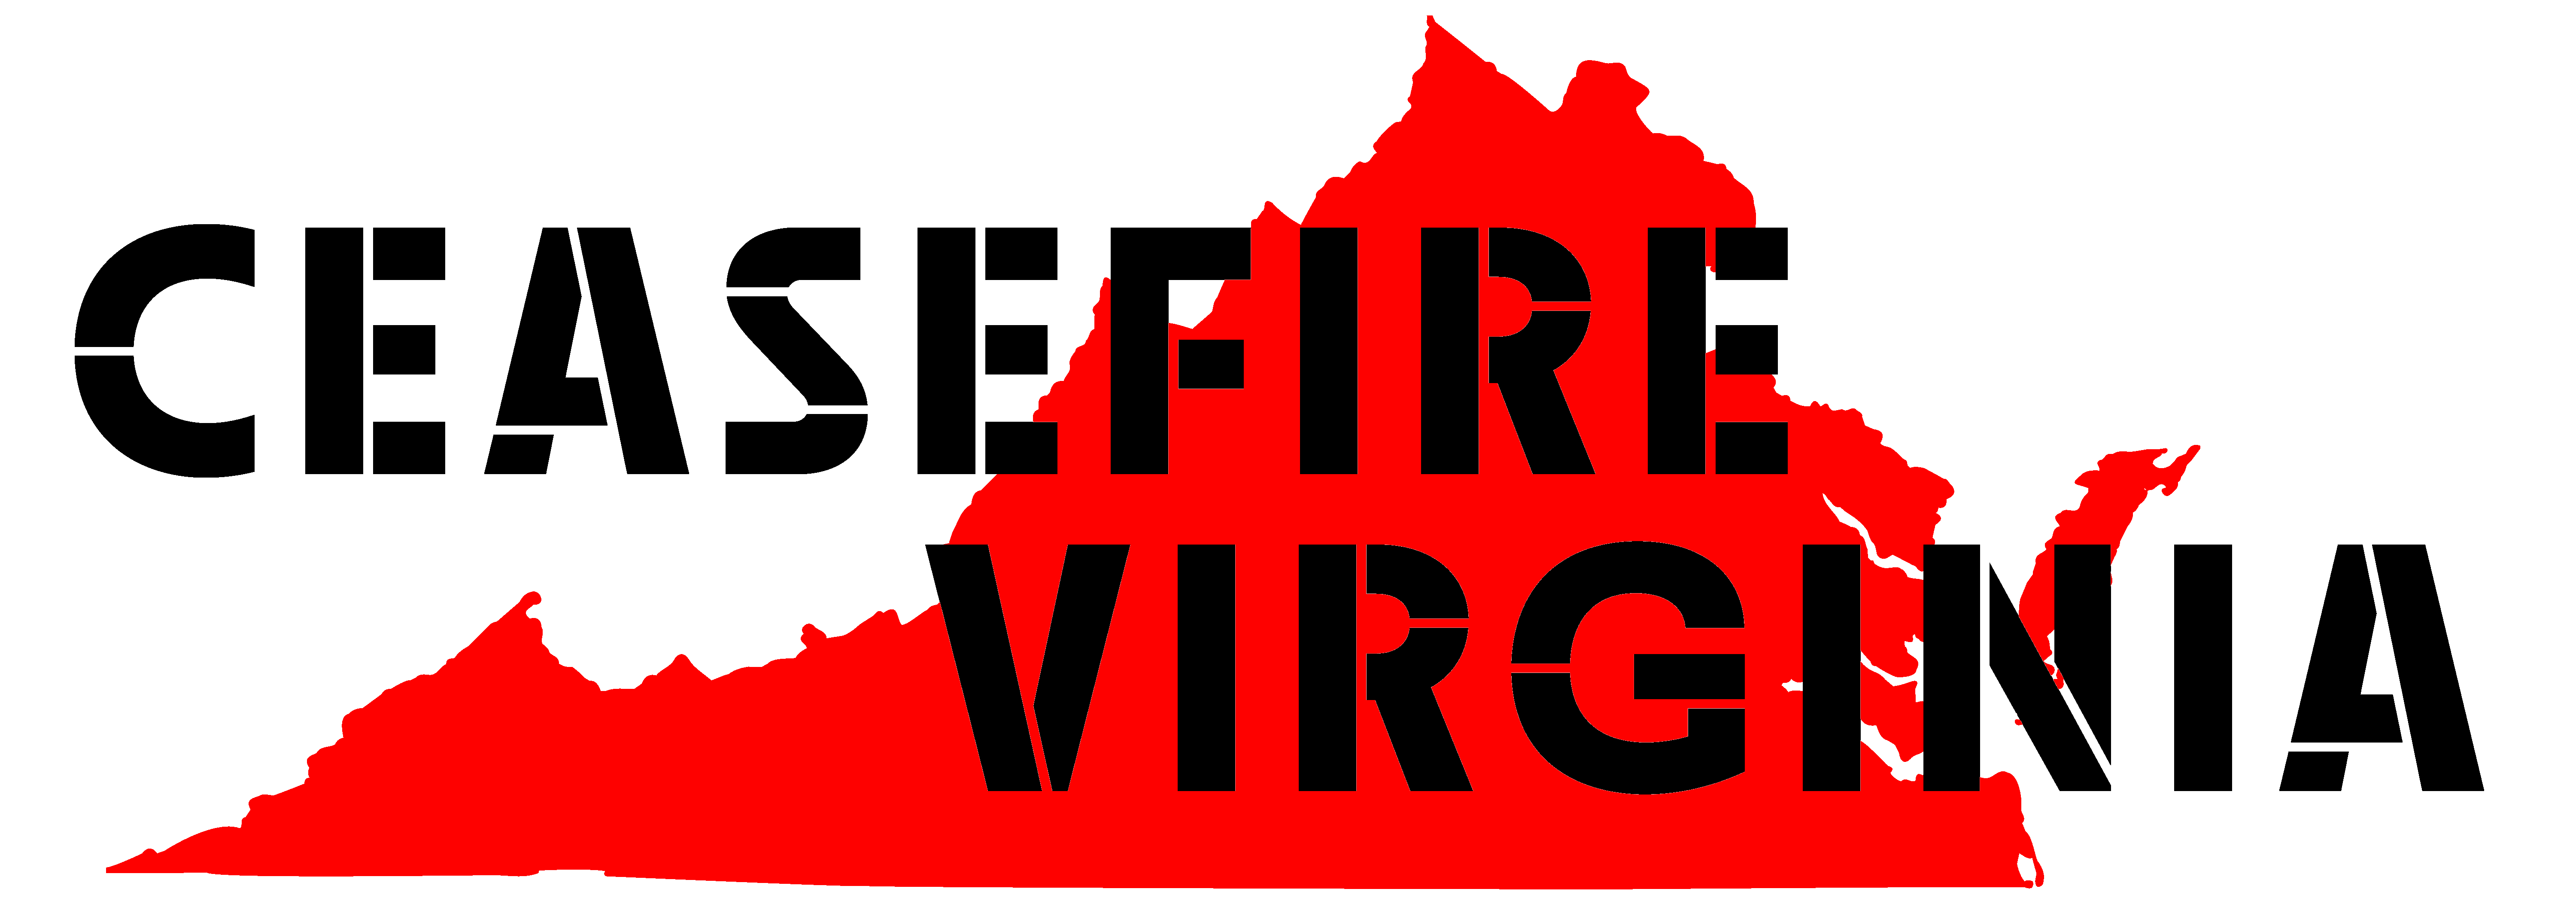 Ceasefire Virginia on top of image of Virginia